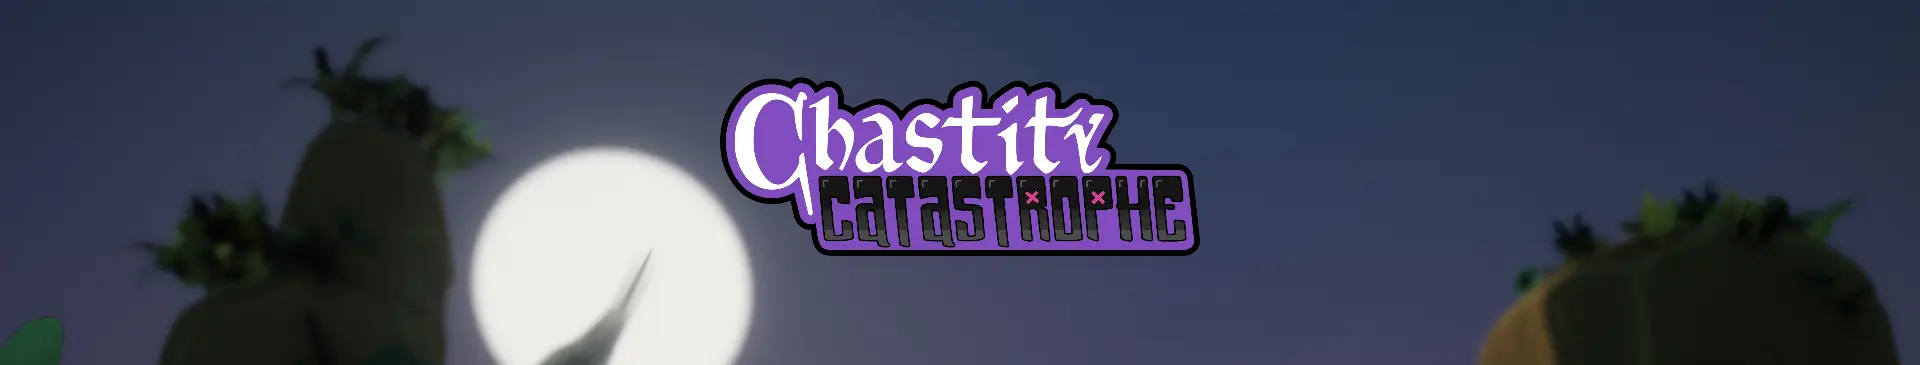 Chastity Catastrophe main image